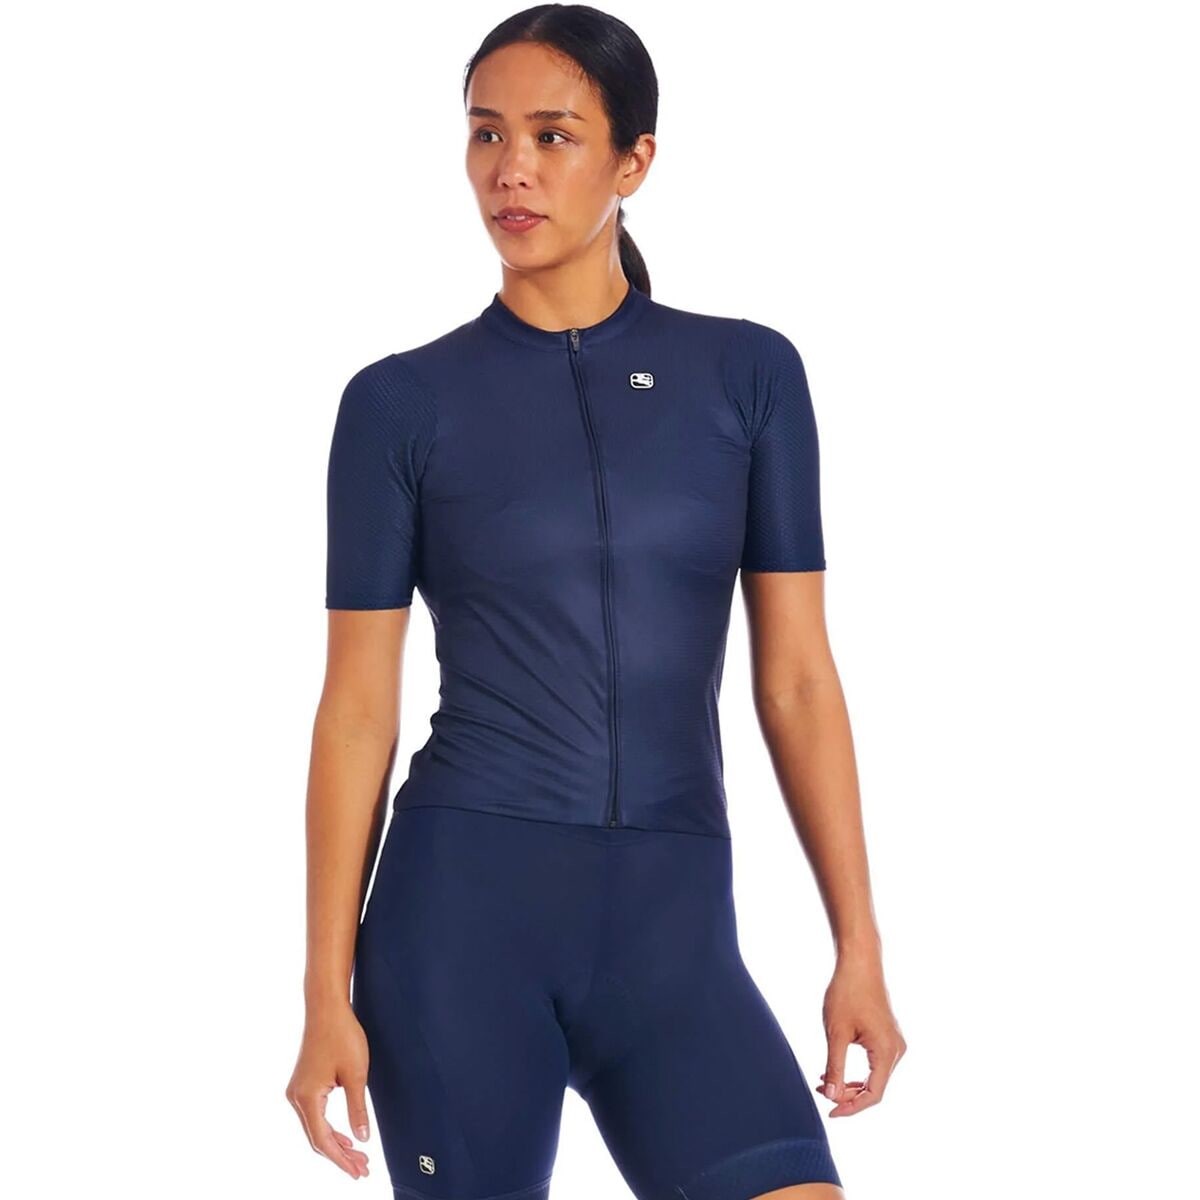 Giordana SilverLine Short-Sleeve Jersey - Women's | Backcountry.com